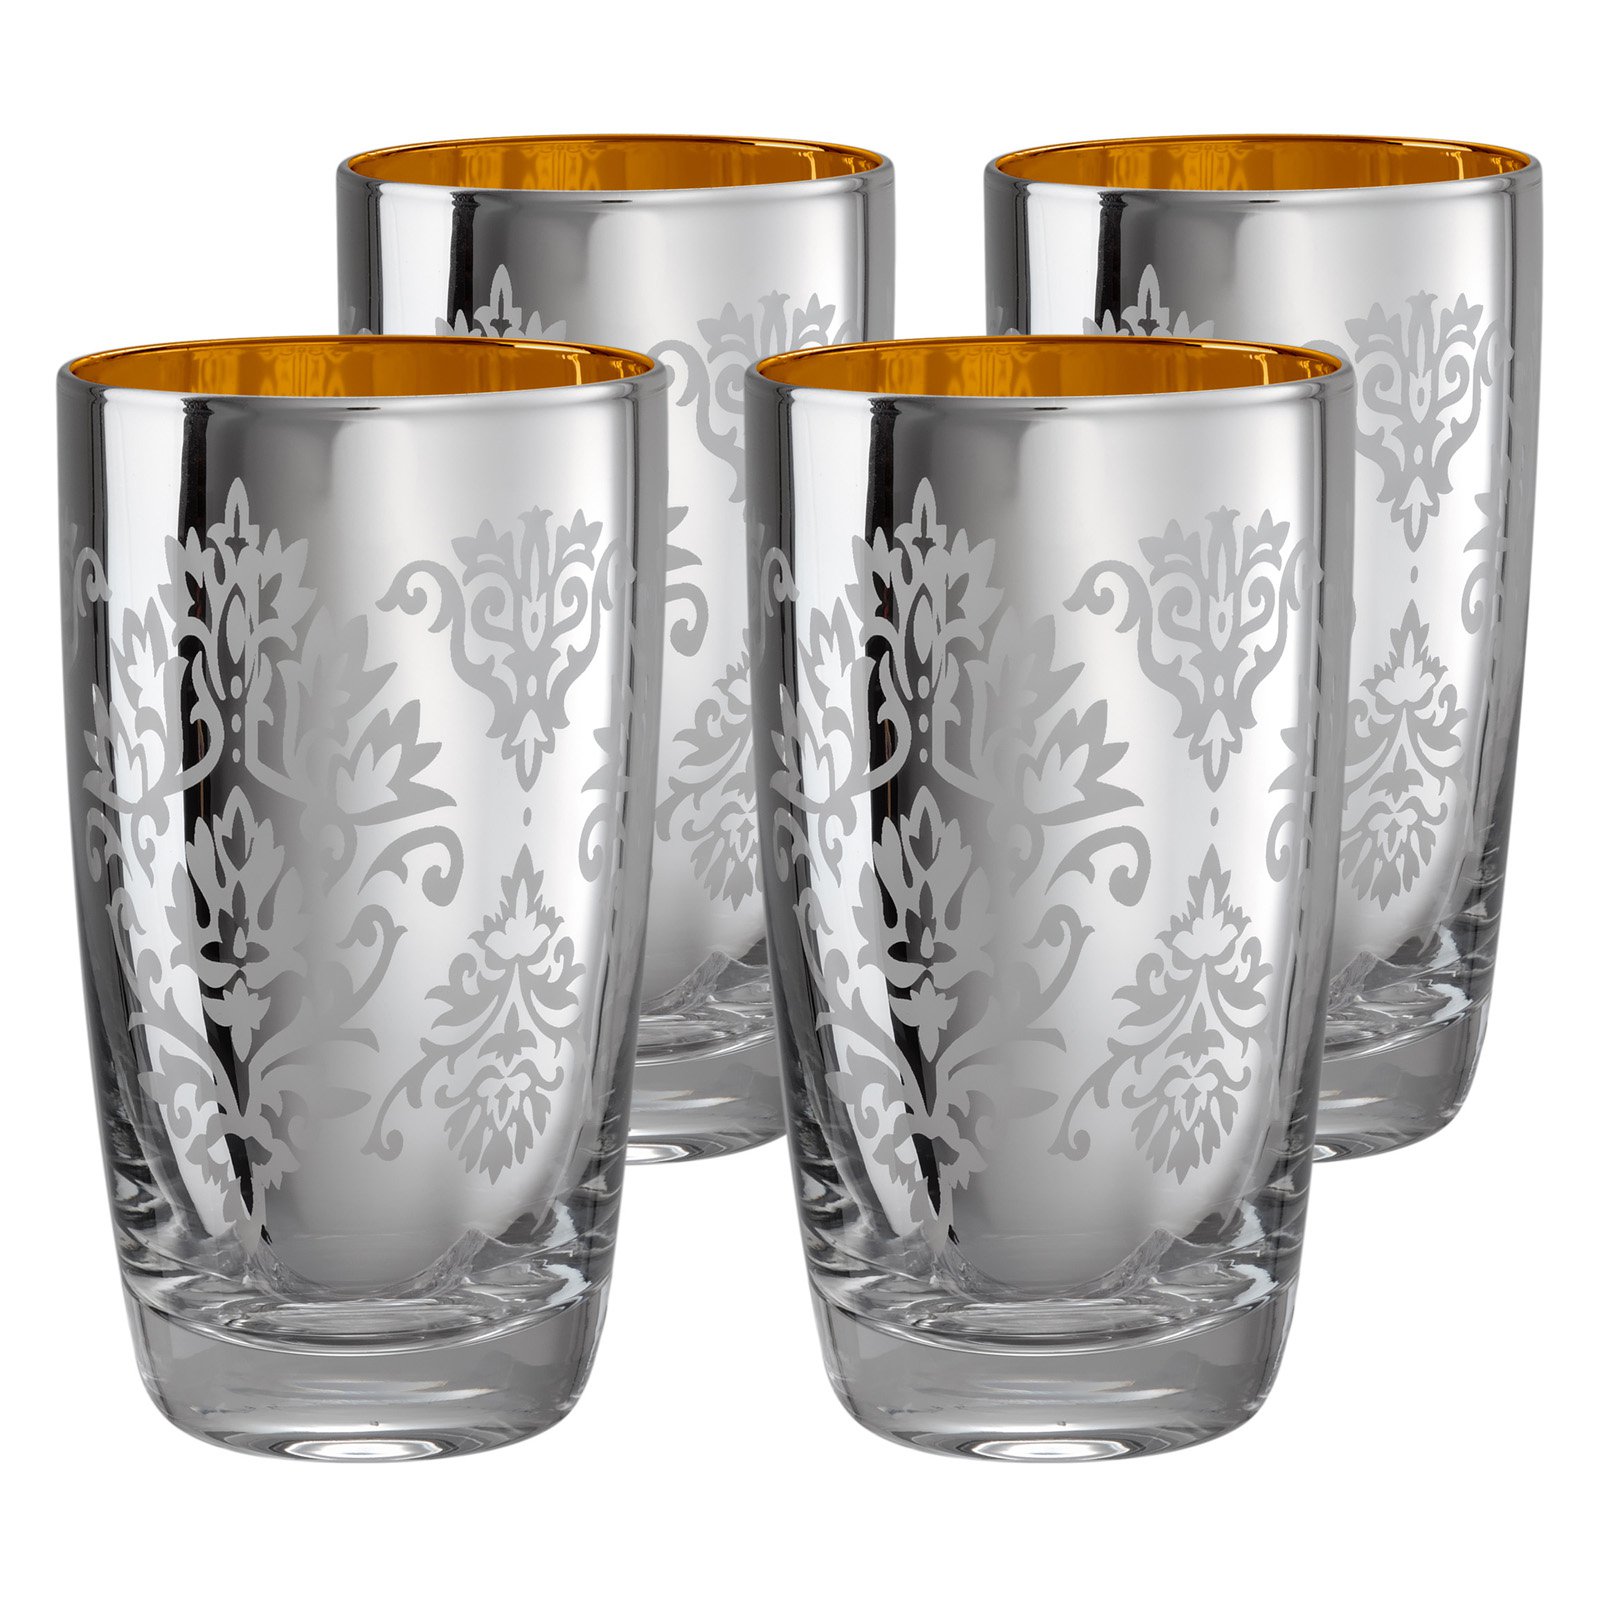 Artland Inc. Silver Brocade HiBall Glasses - Set of 4 - image 1 of 2